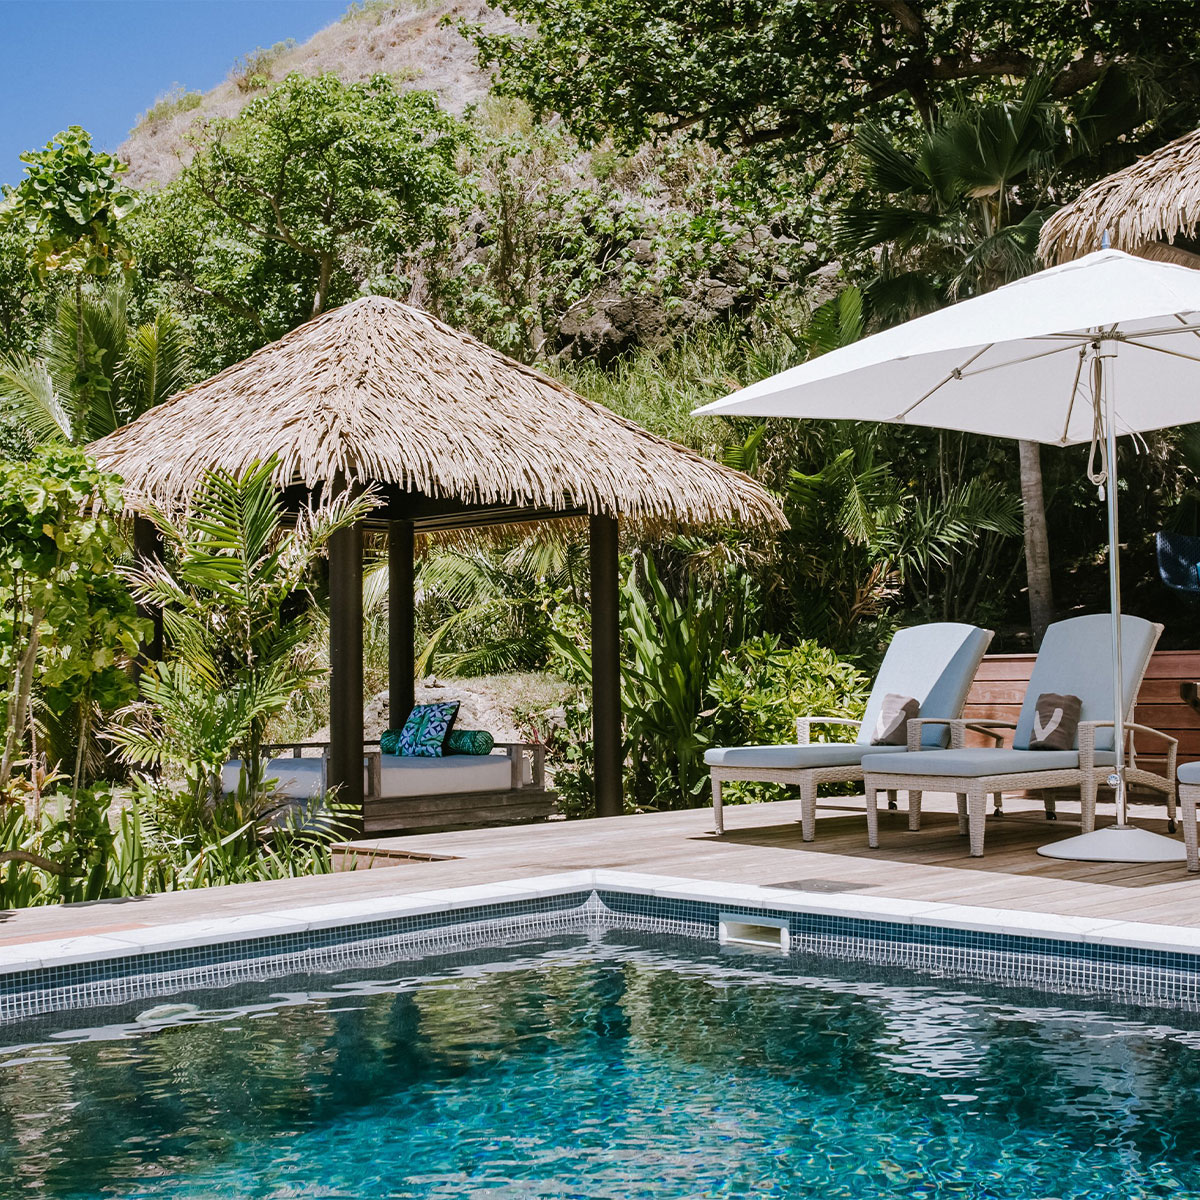 The royal villa luxury bechfront holiday house on vomo island fiji